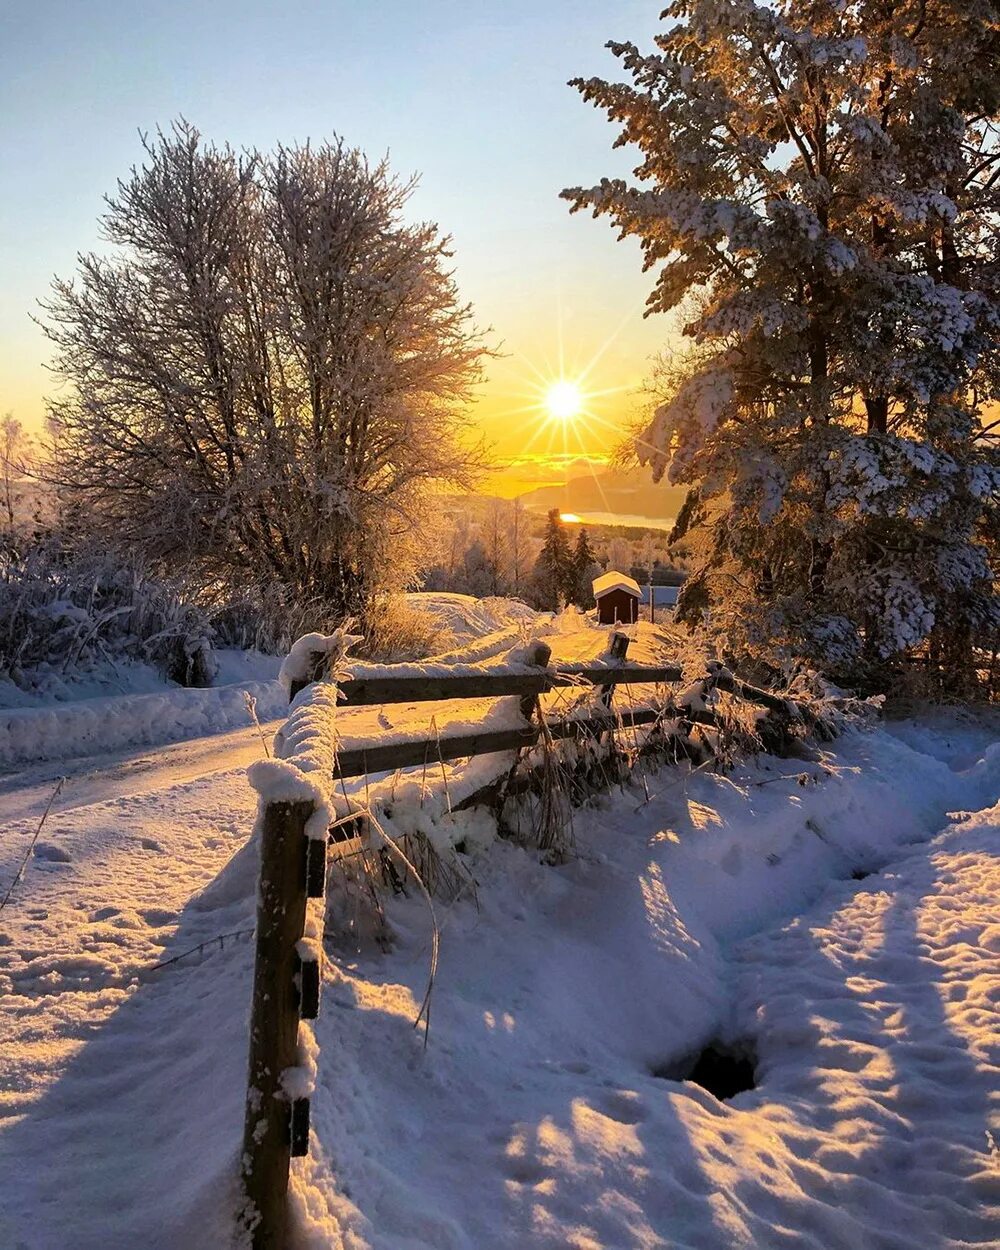 Утро зима картинки. Солнечный зимний день. Зимнее утро. Утро зима. Мороз и солнце.